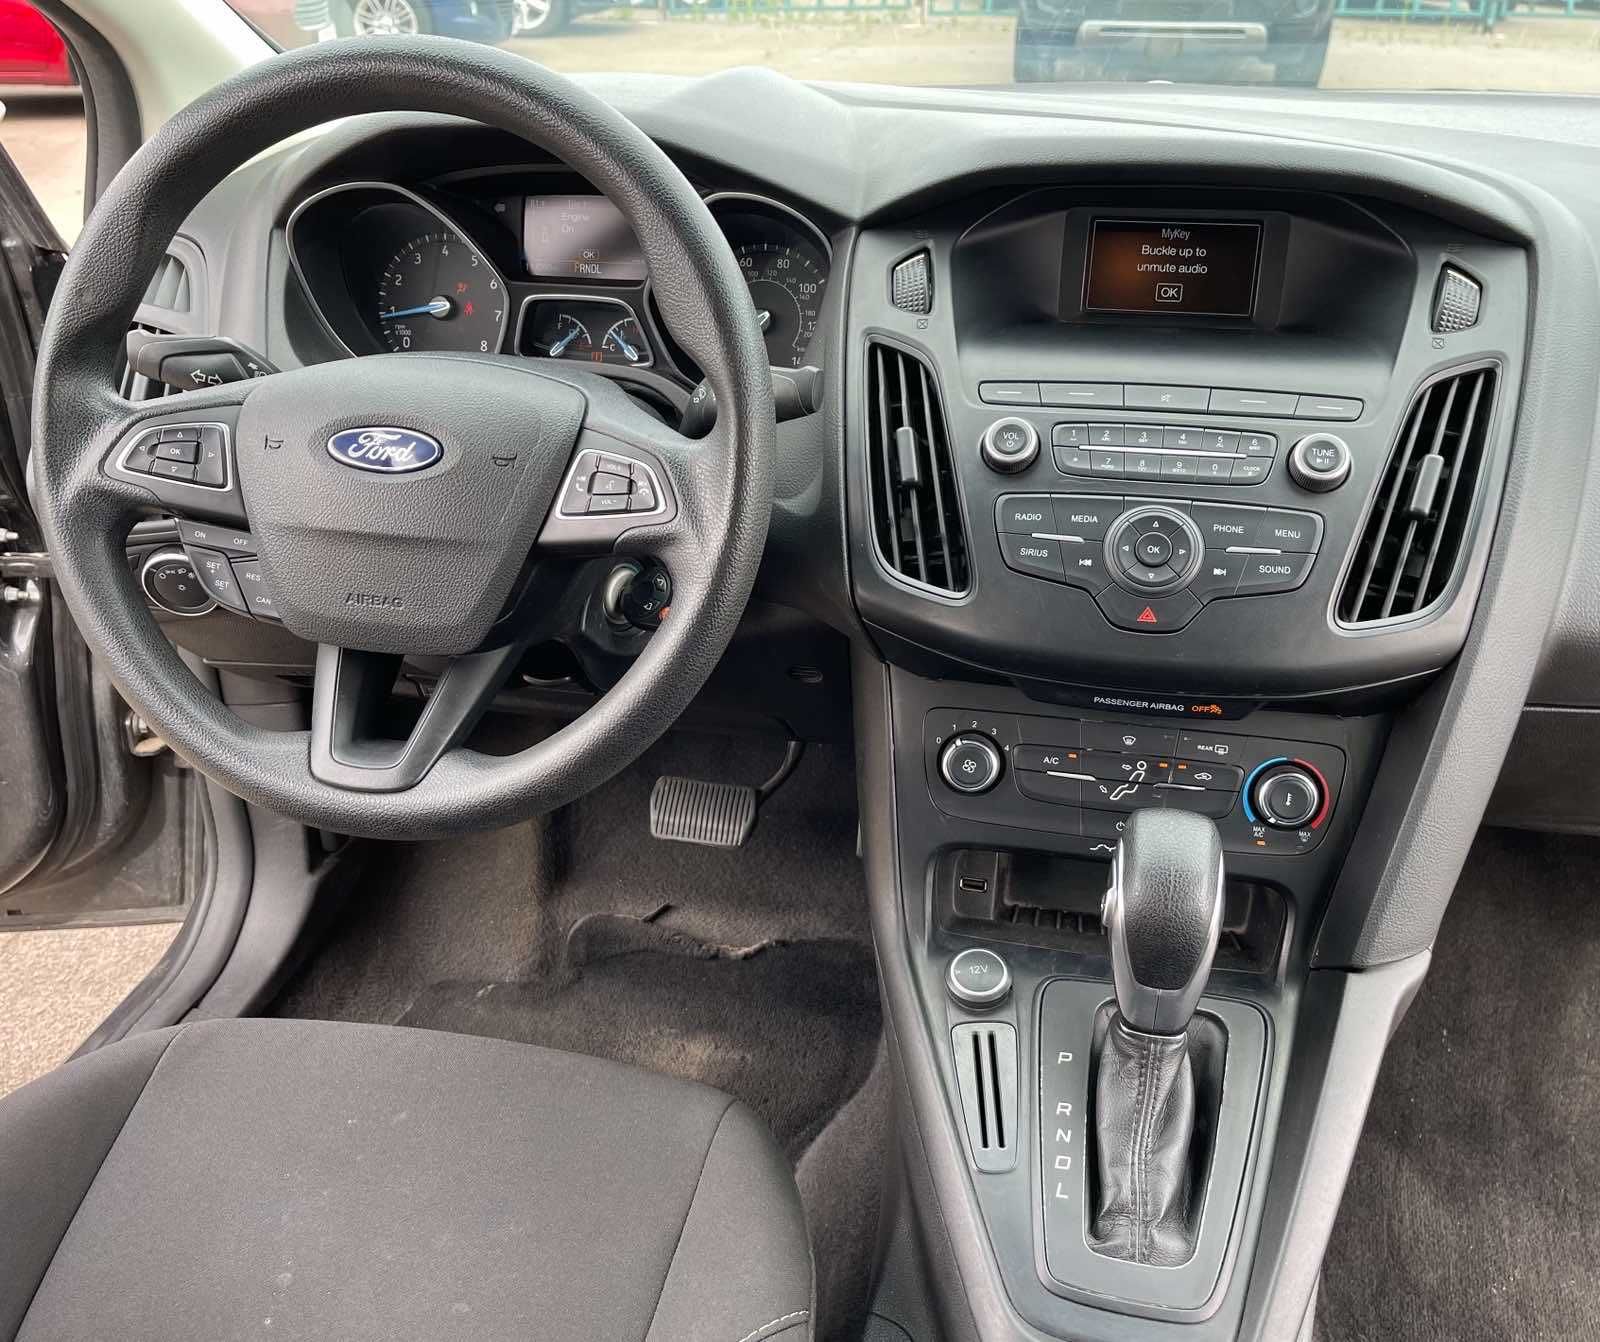 Ford Focus SE 2018 2.0